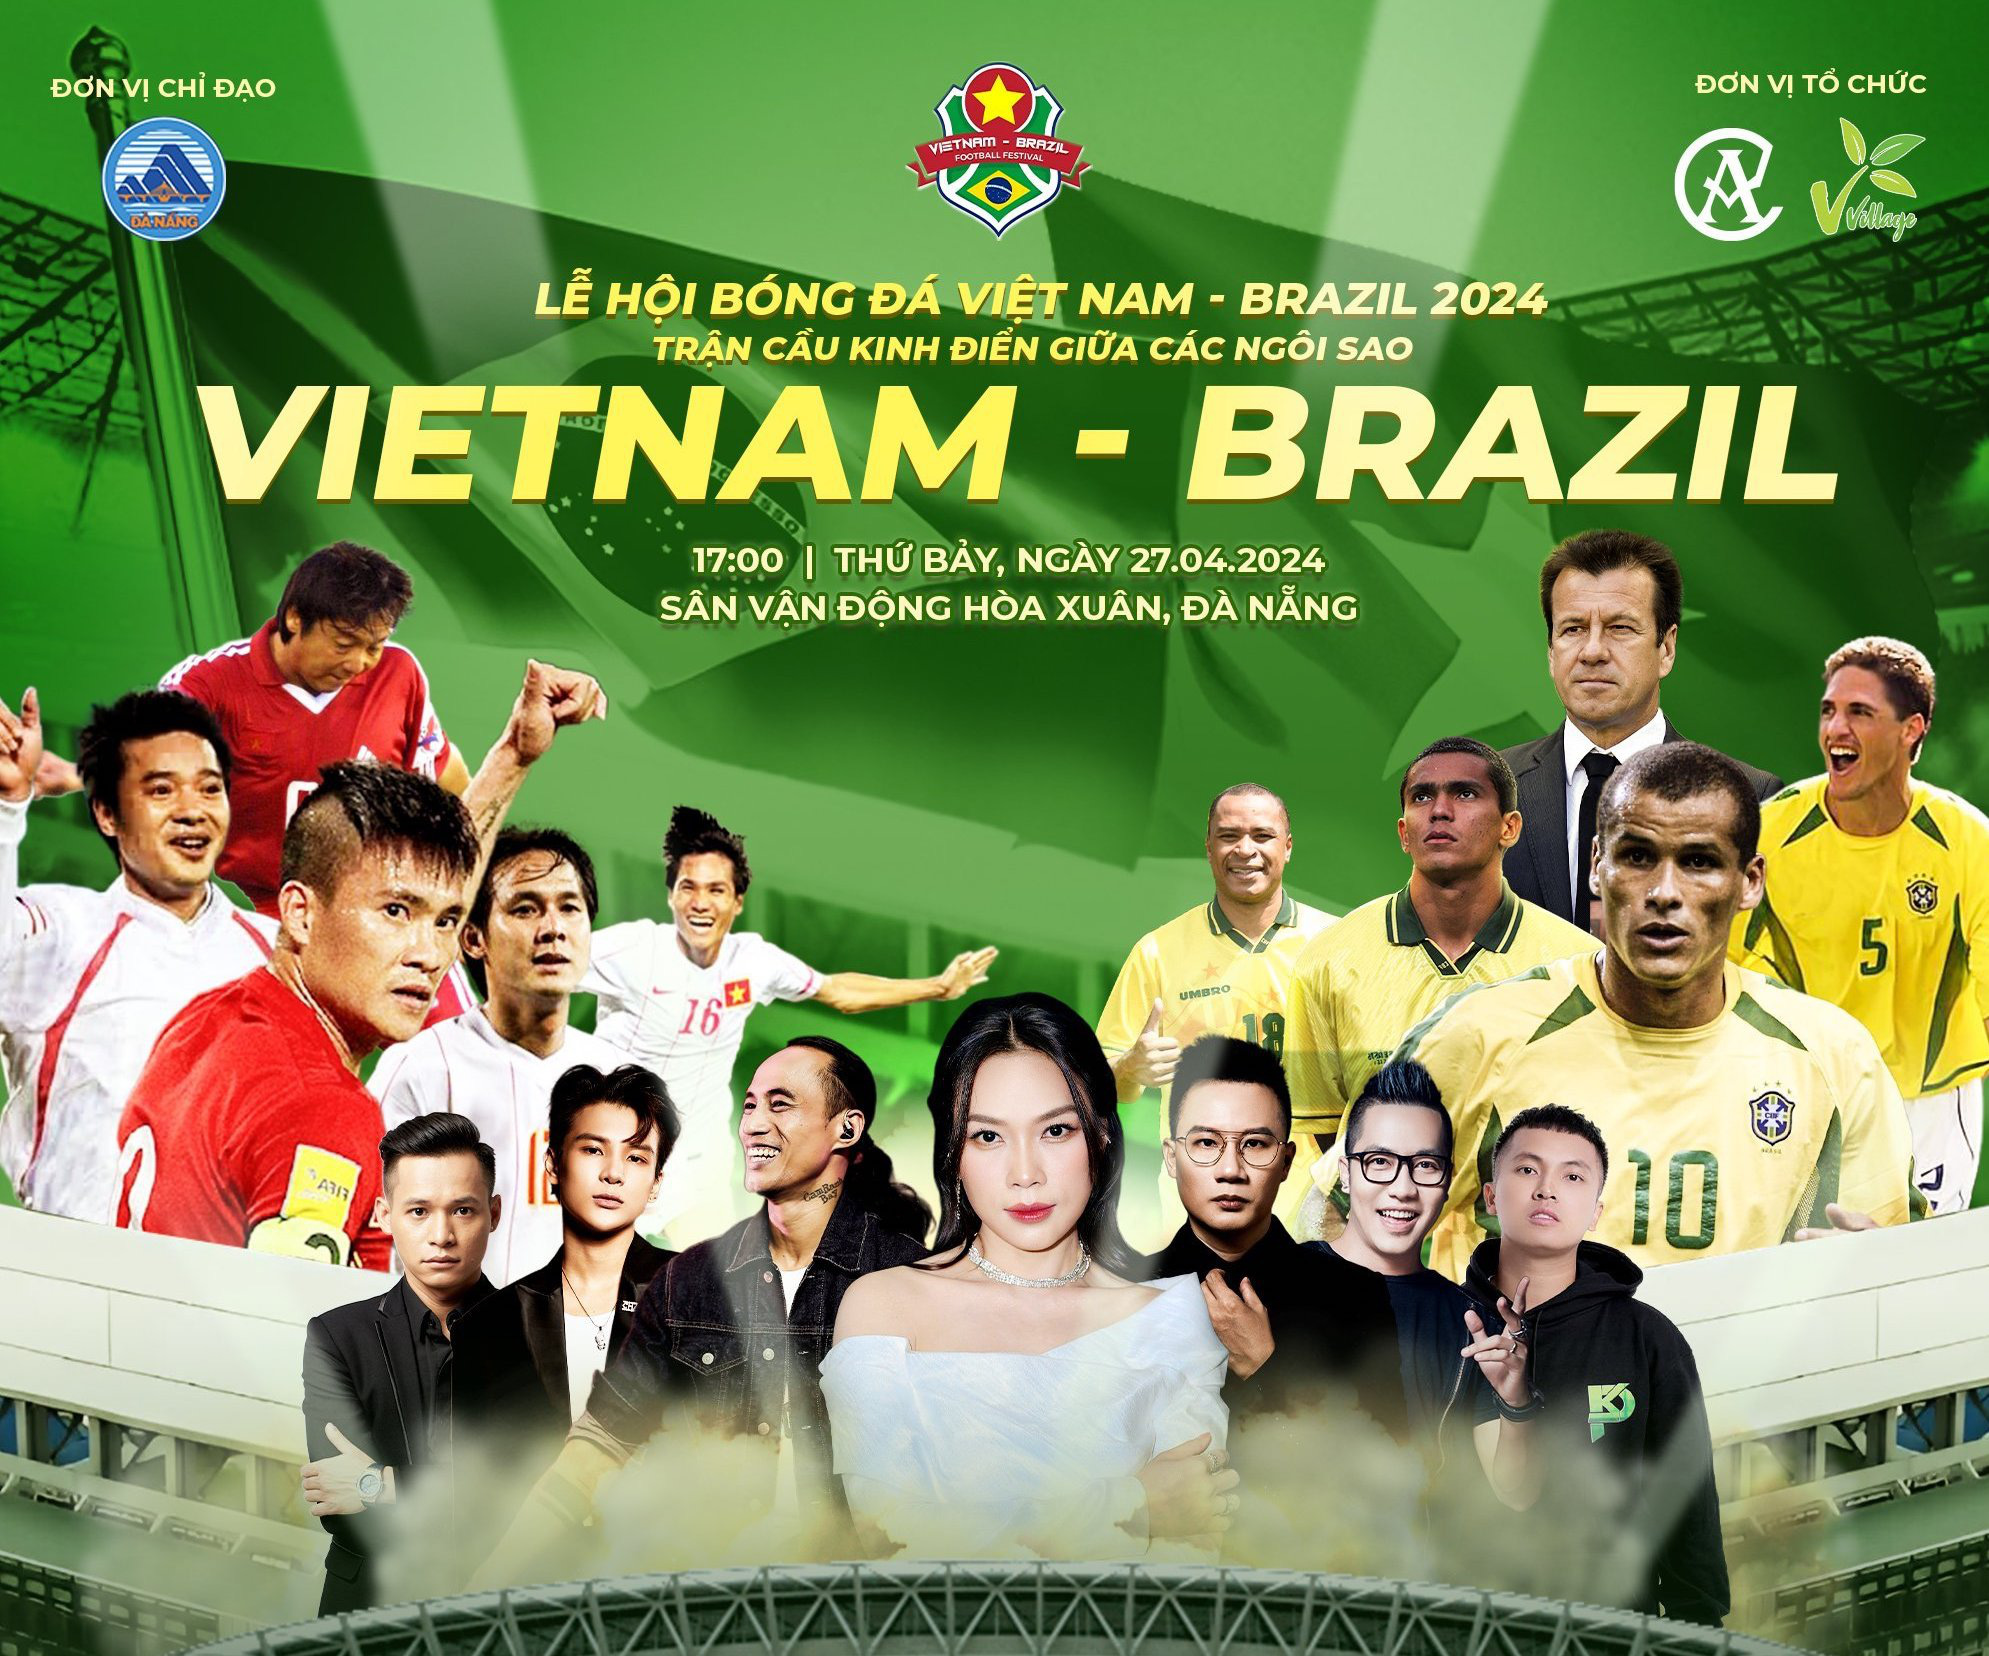 A poster for the Vietnam - Brazil Football Festival 2024 in Da Nang City, central Vietnam.